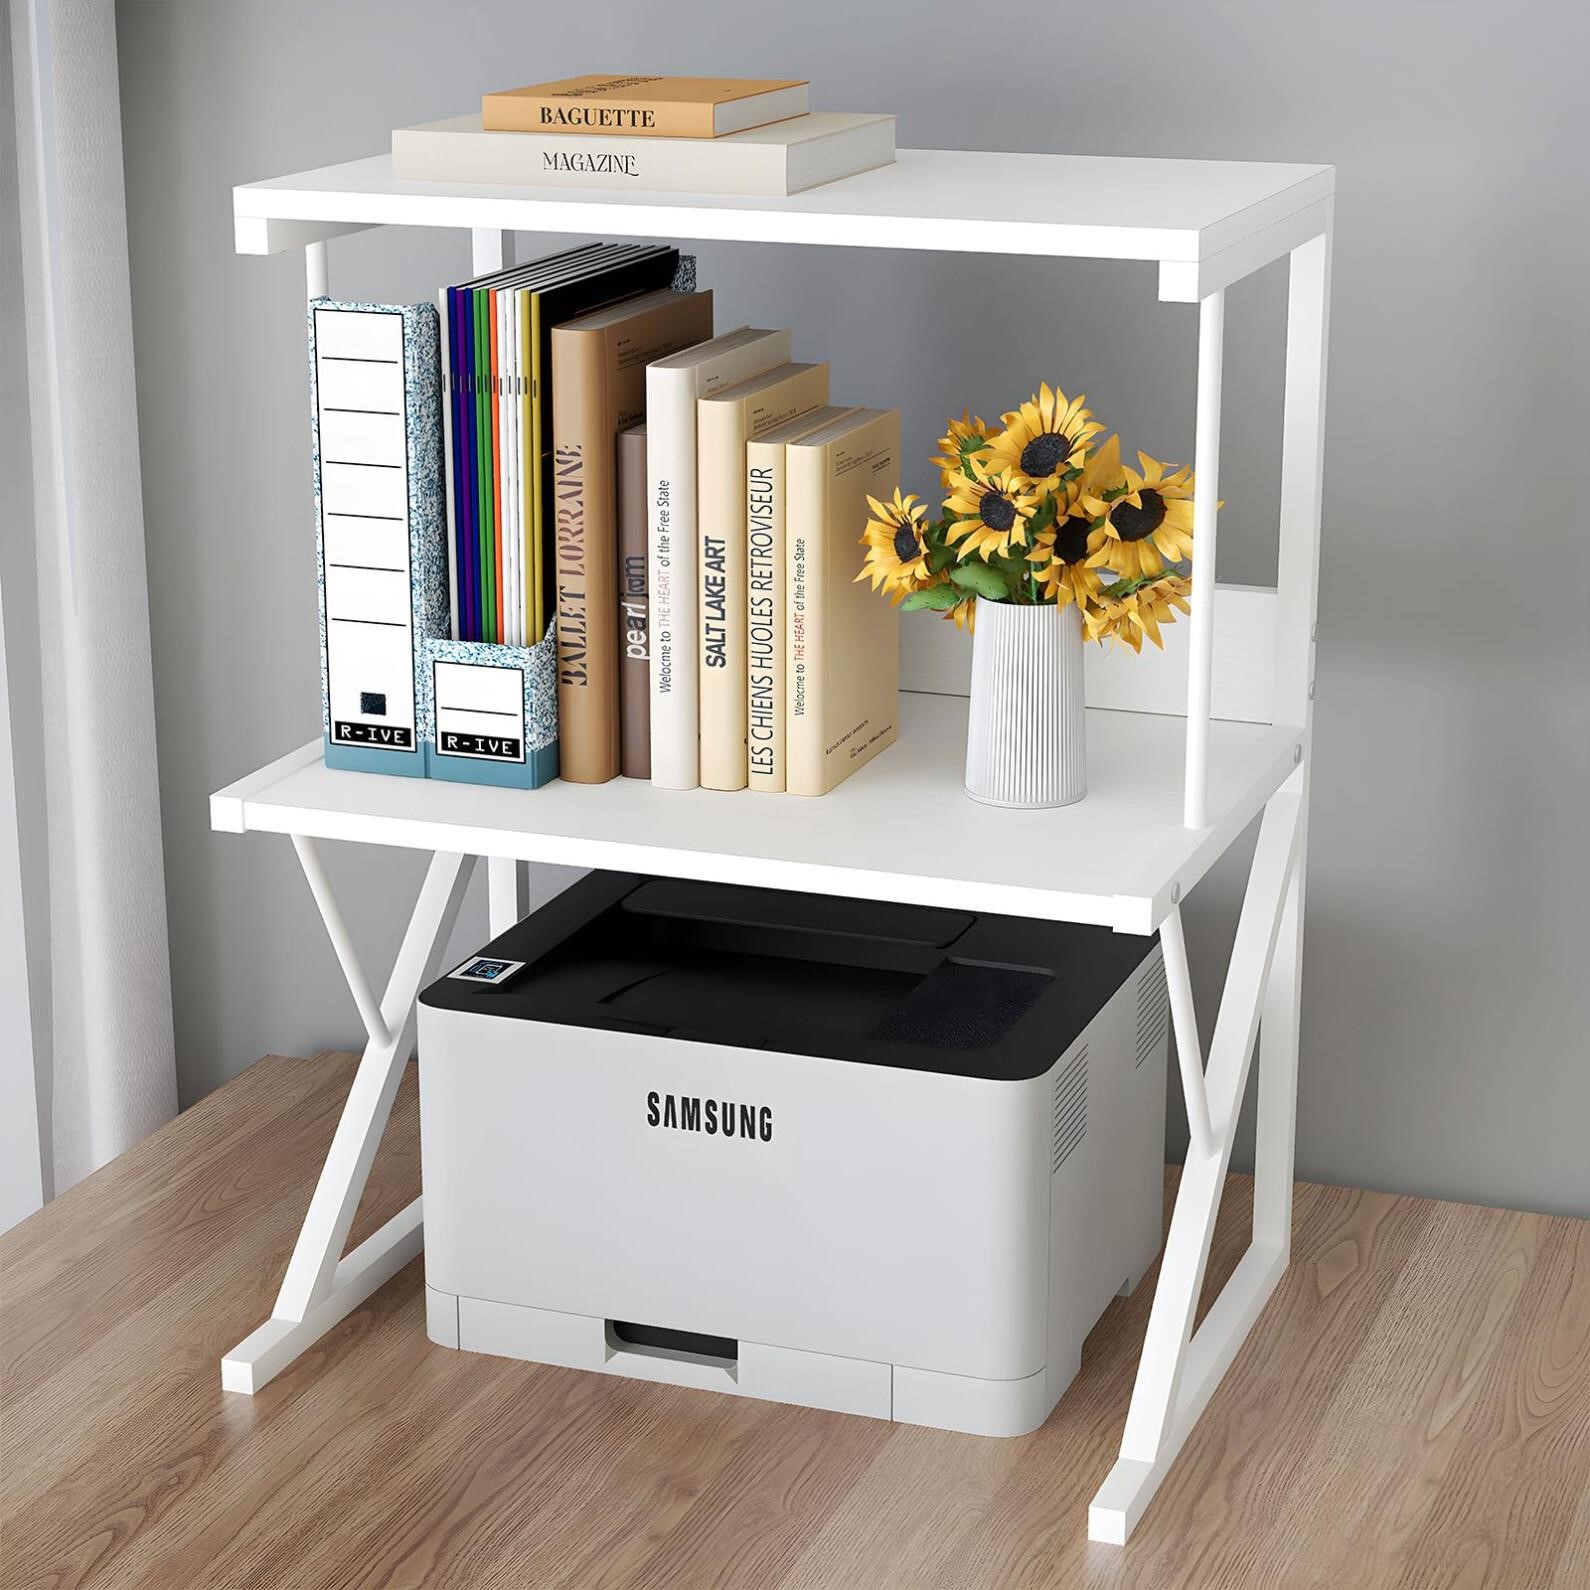 Printer StandAboxoo Printer Stand for Desk, Deskto